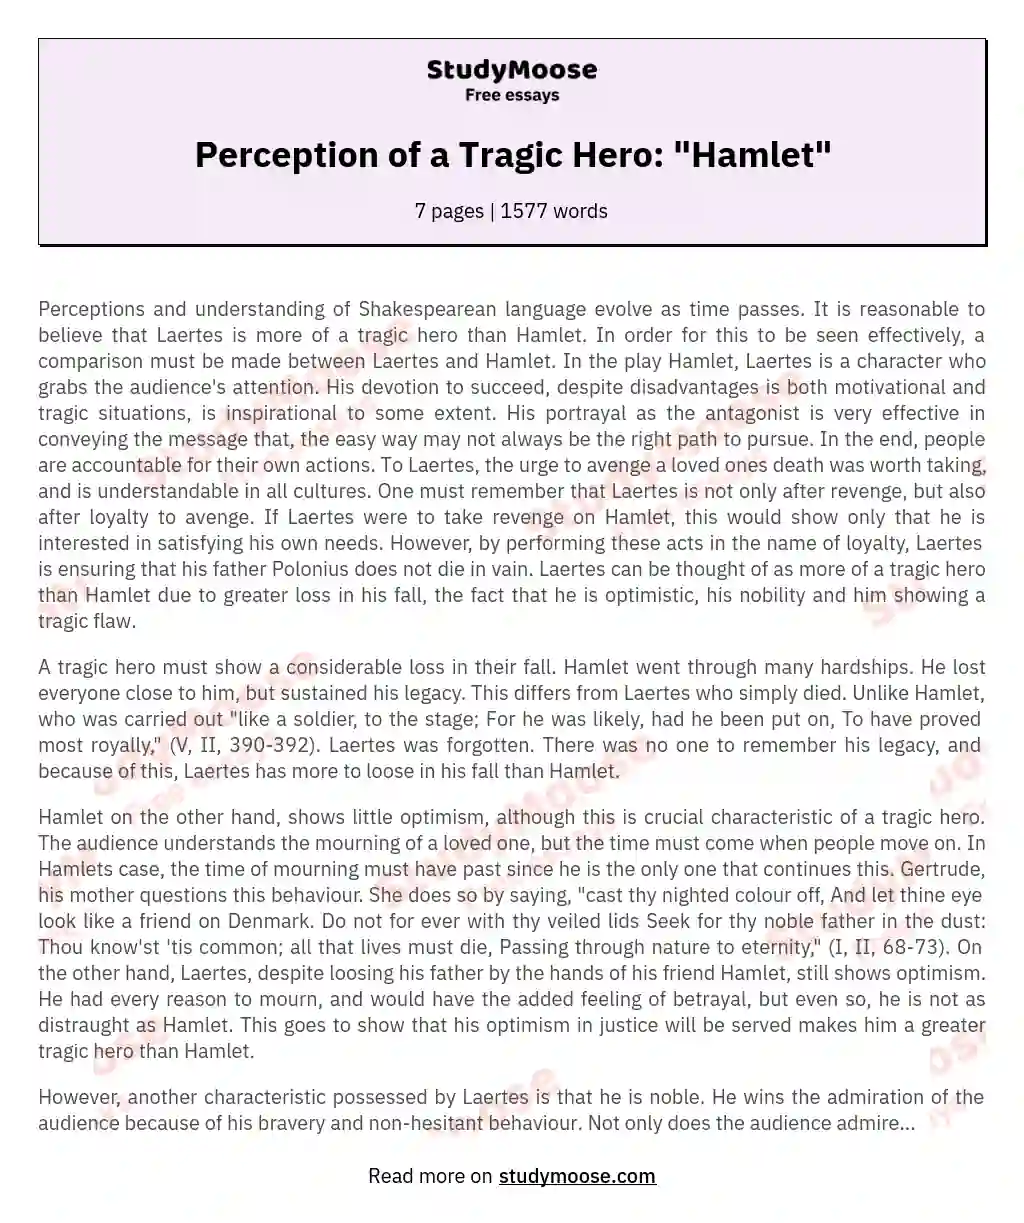 Perception of a Tragic Hero: "Hamlet" essay